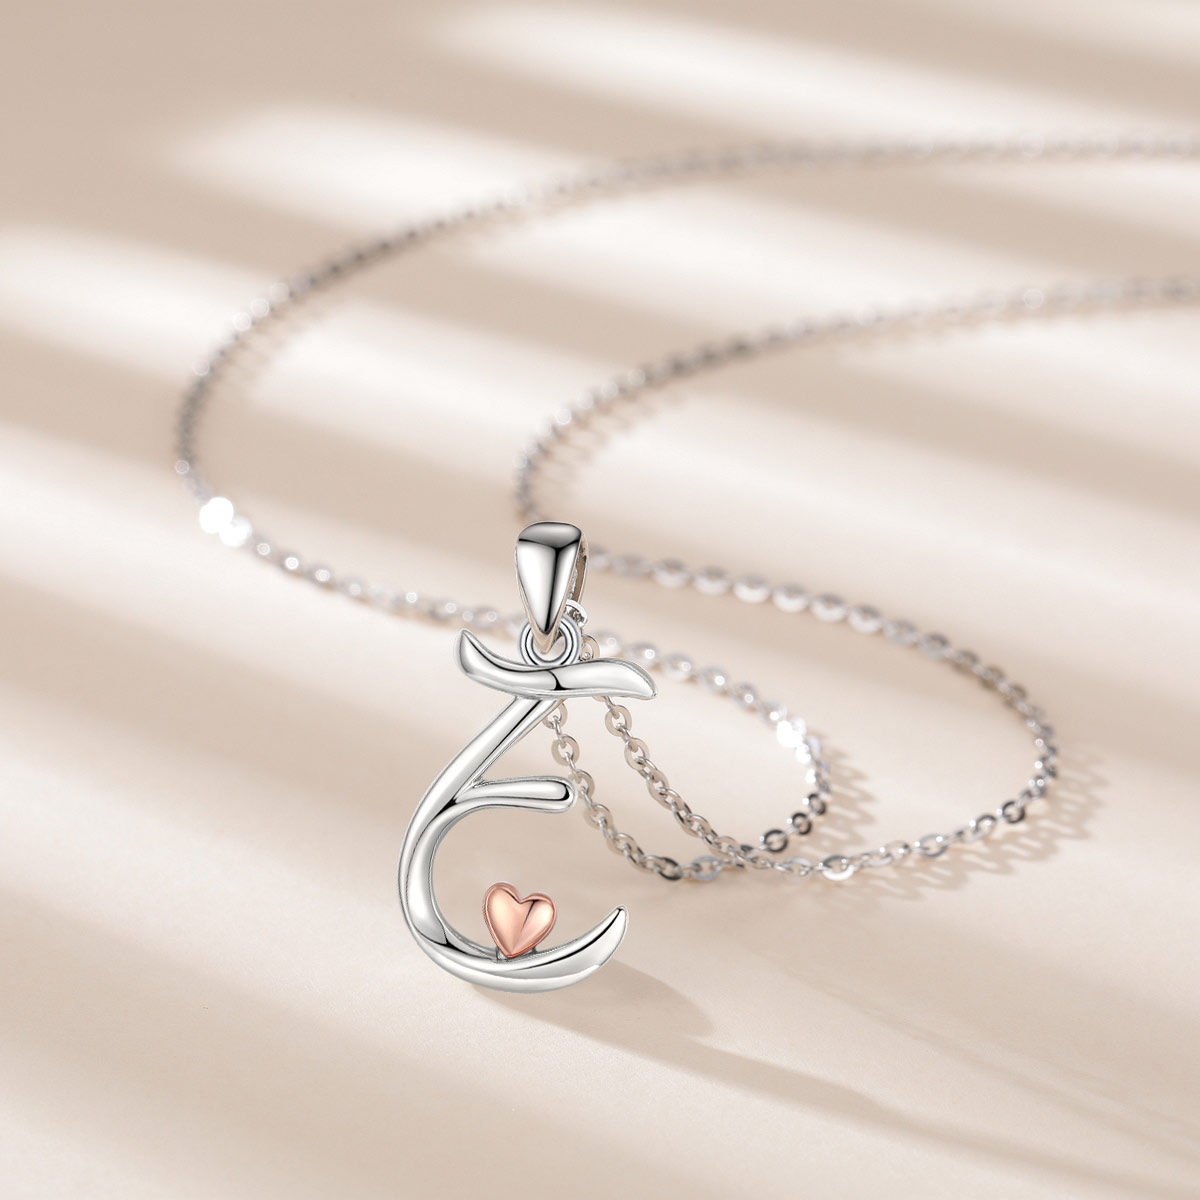 Eudora handmade Sterling Silver Initial Letter Pendant Necklace for Women Men Rose Gold Color Heart Letter Name Choker Jewelry Gift 3